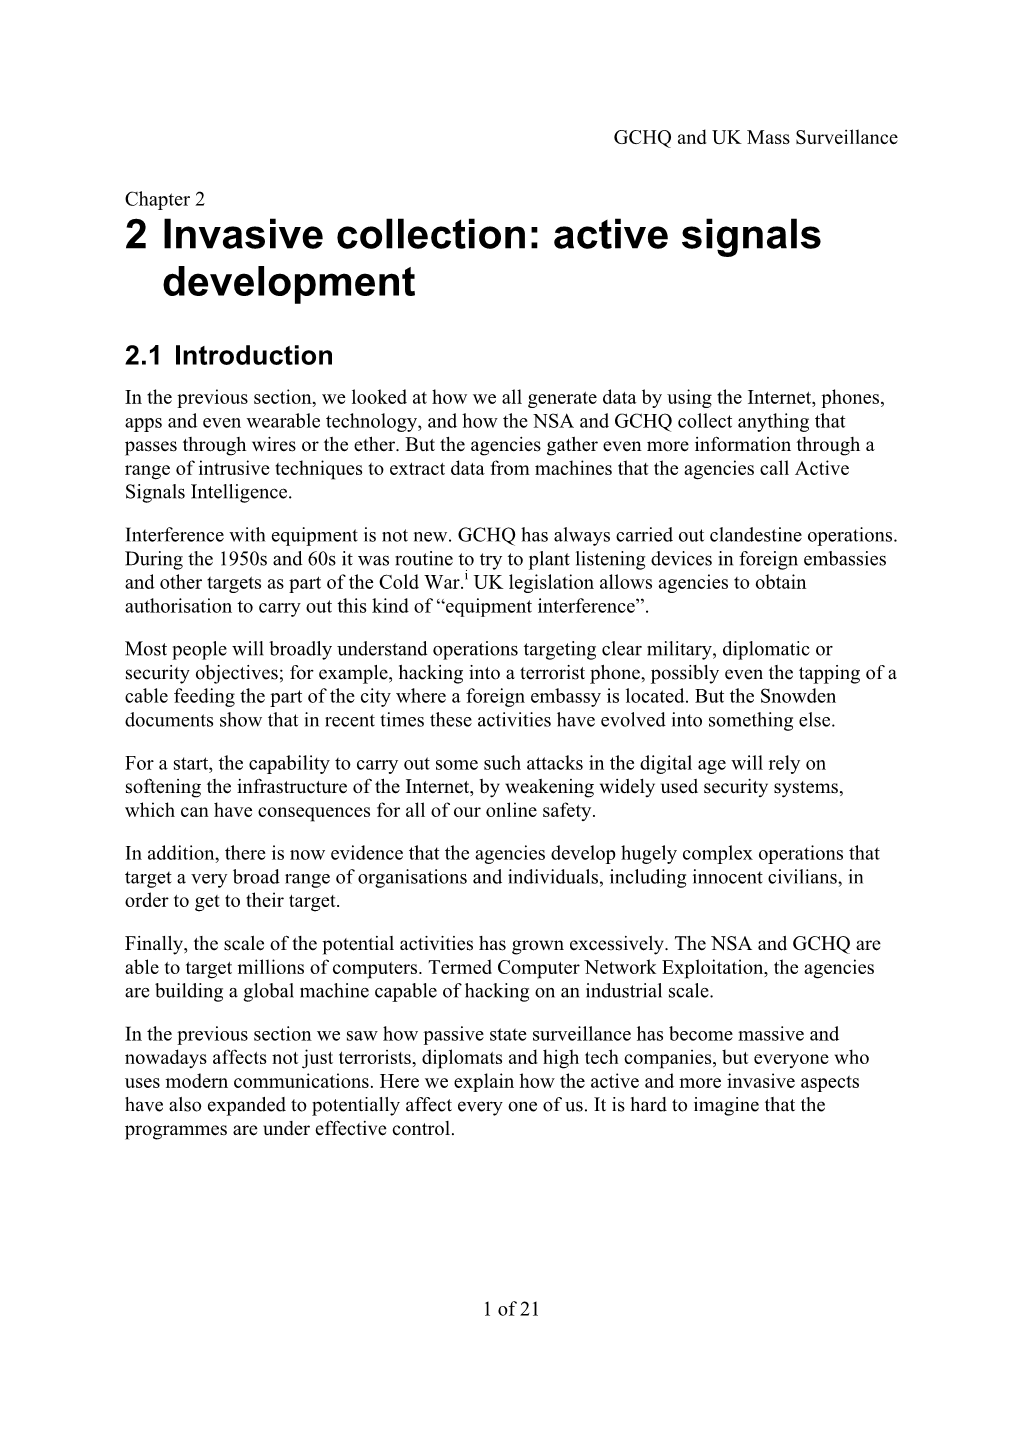 2 Invasive Collection: Active Signals Development